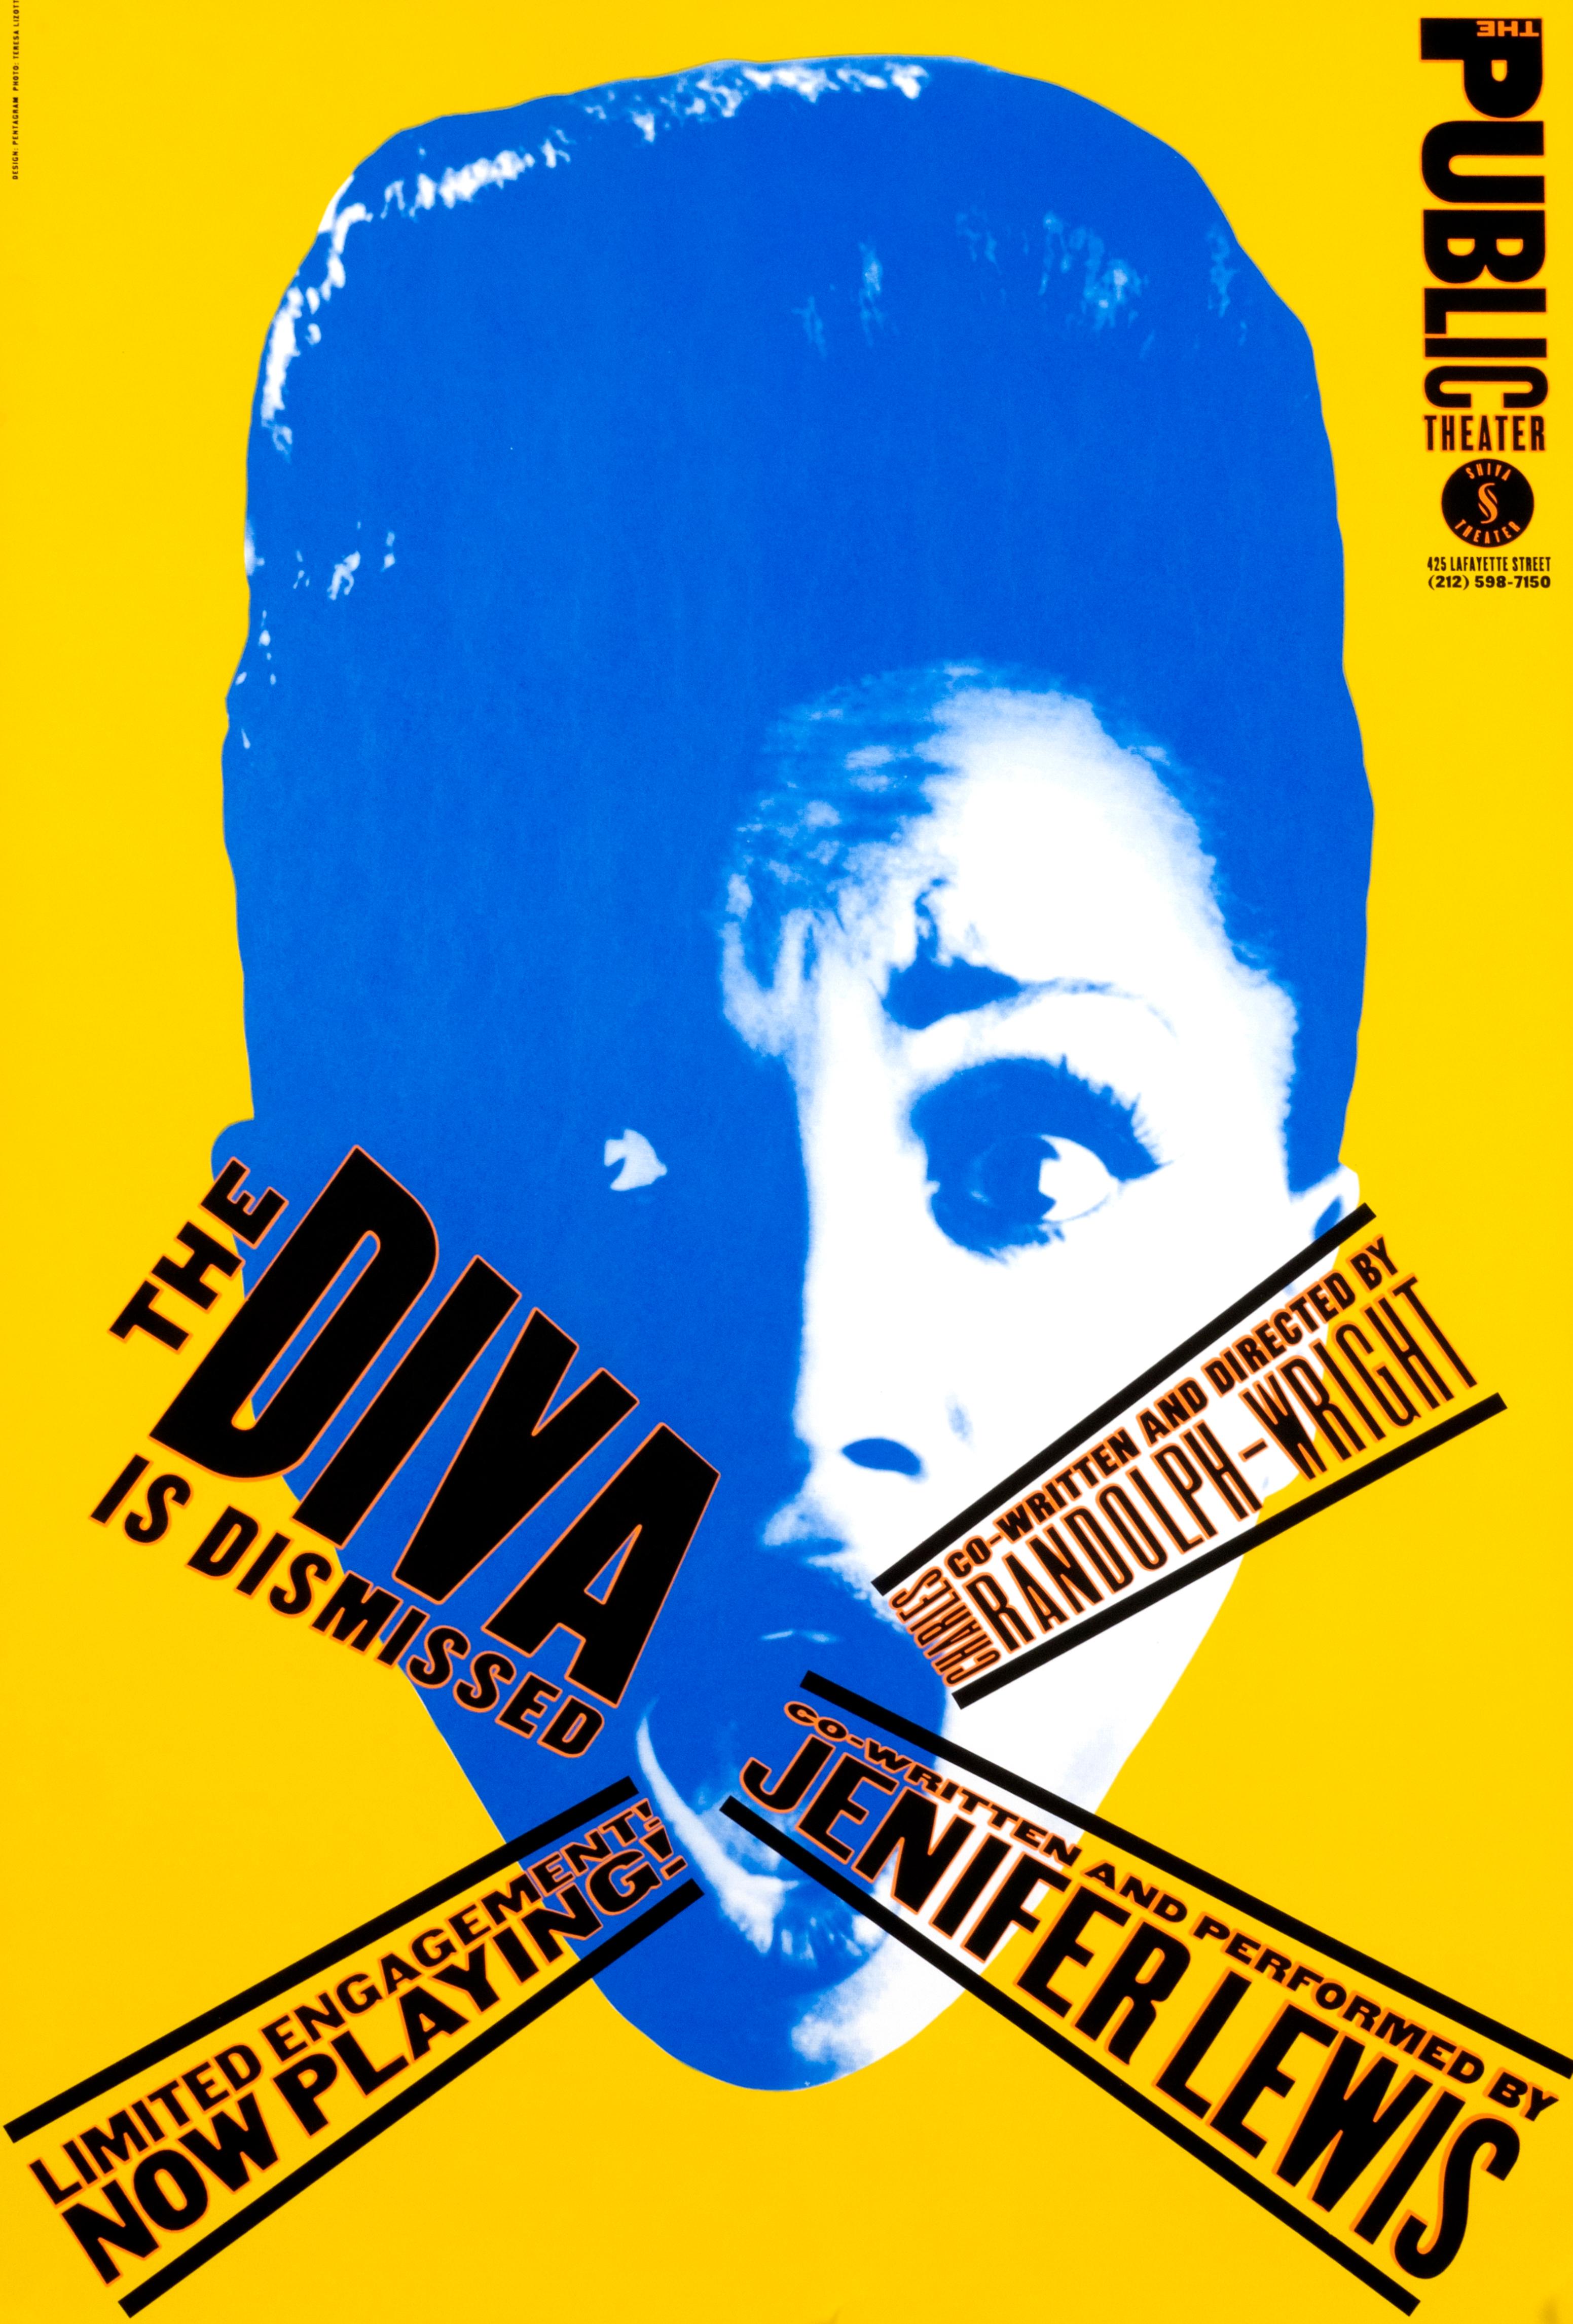 Paula Scher Figurative Print - "The Diva is Dismissed - Public Theater" Original Vintage Theater Poster